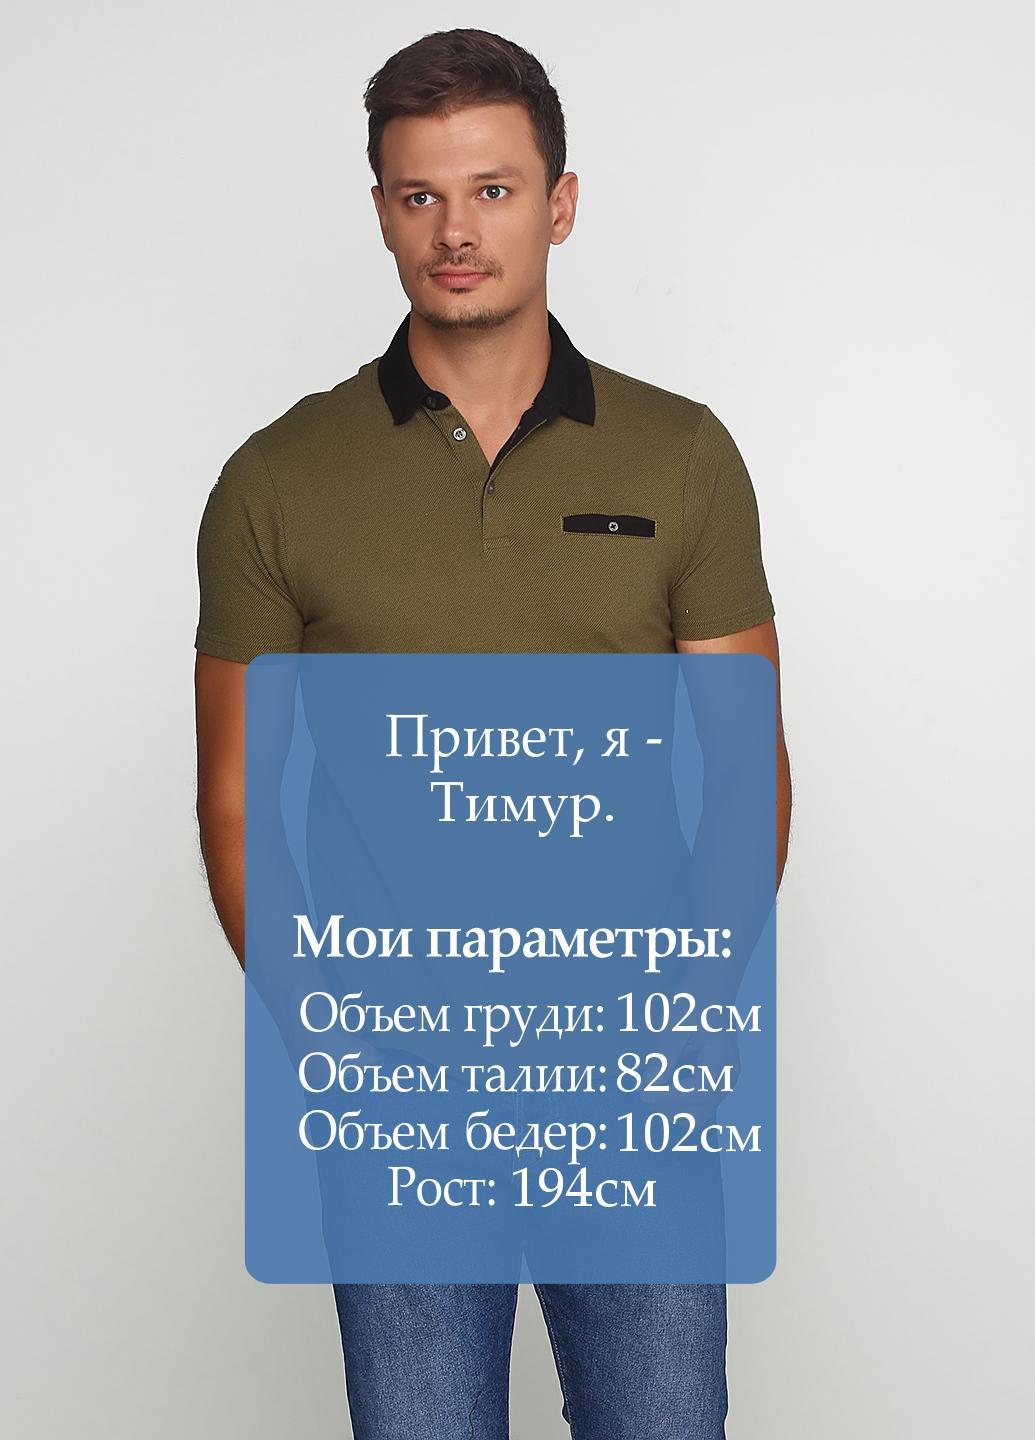 Оливковая (хаки) футболка-поло для мужчин Marks & Spencer